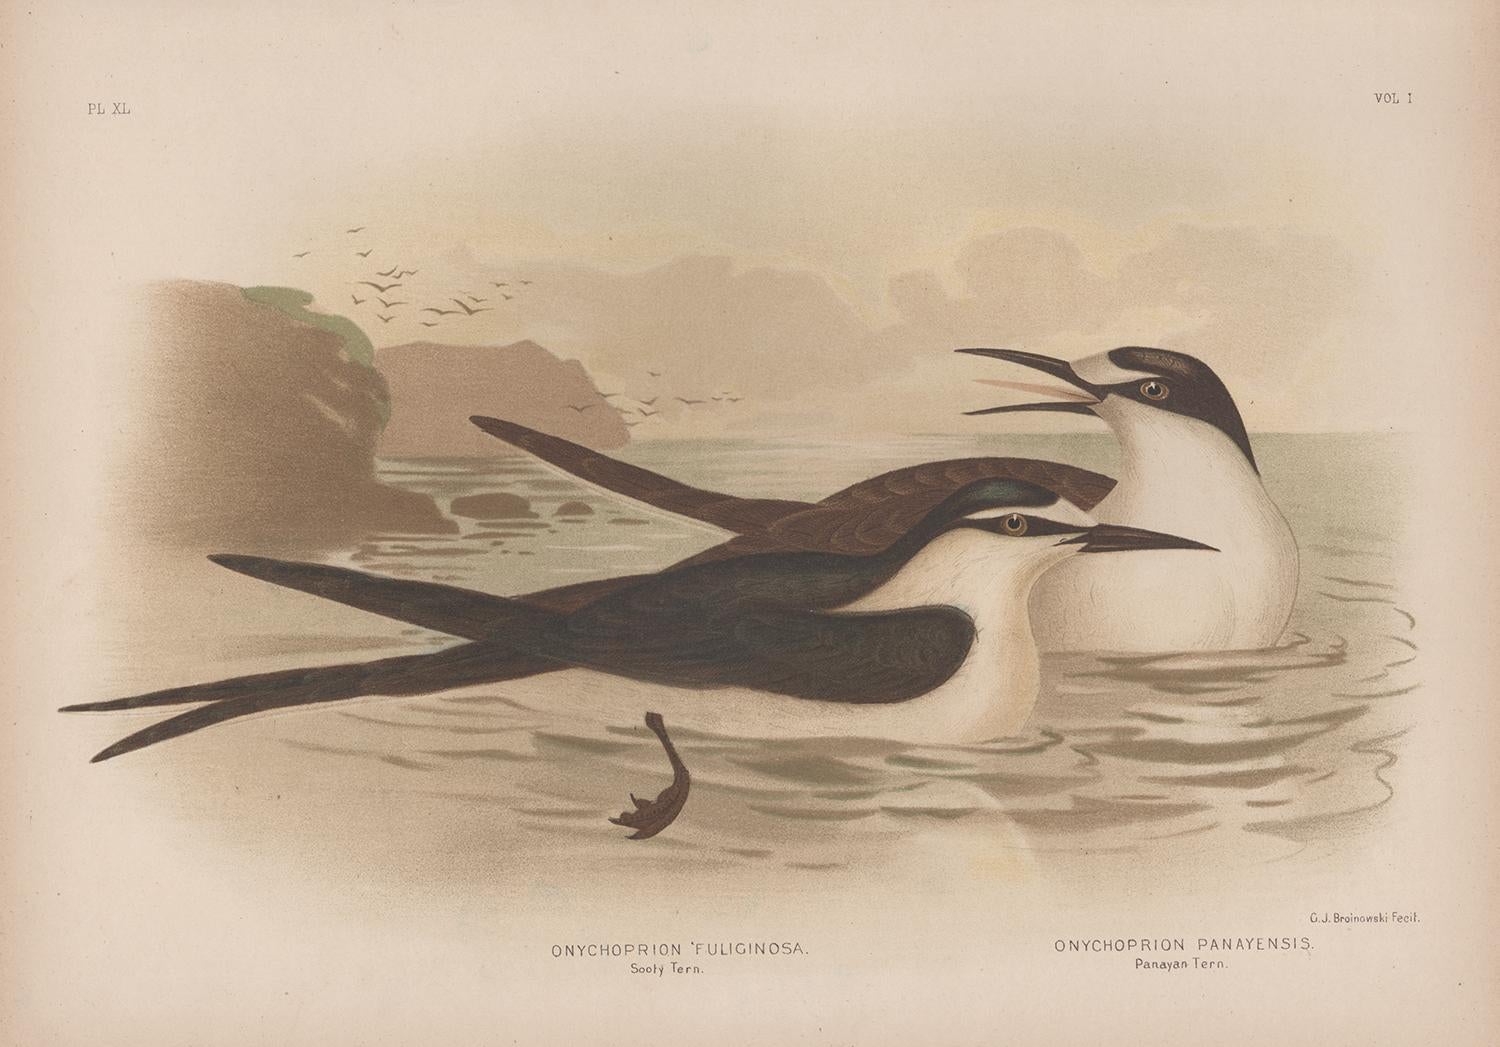 Animal Print Gracius Broinowski - Sooty Tern et Panayan Tern, ancien tirage chromolithographie d'oiseau de mer, 1889